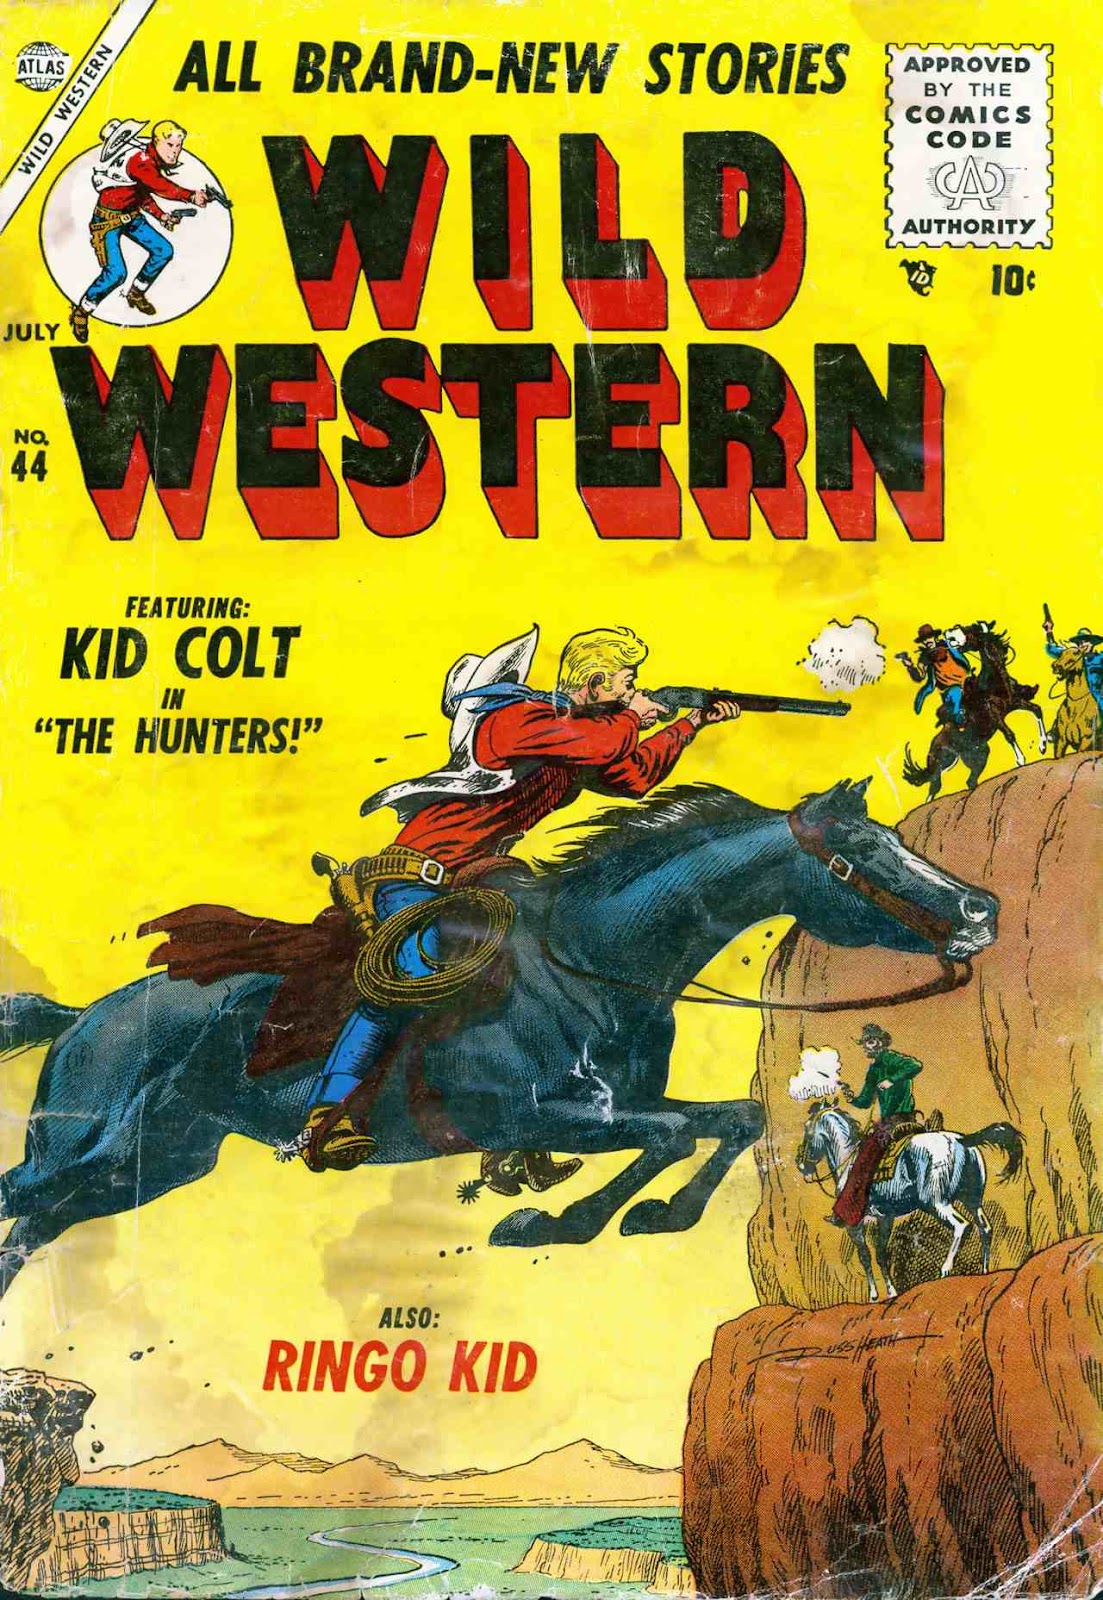 Wild Western issue 44 - Page 1